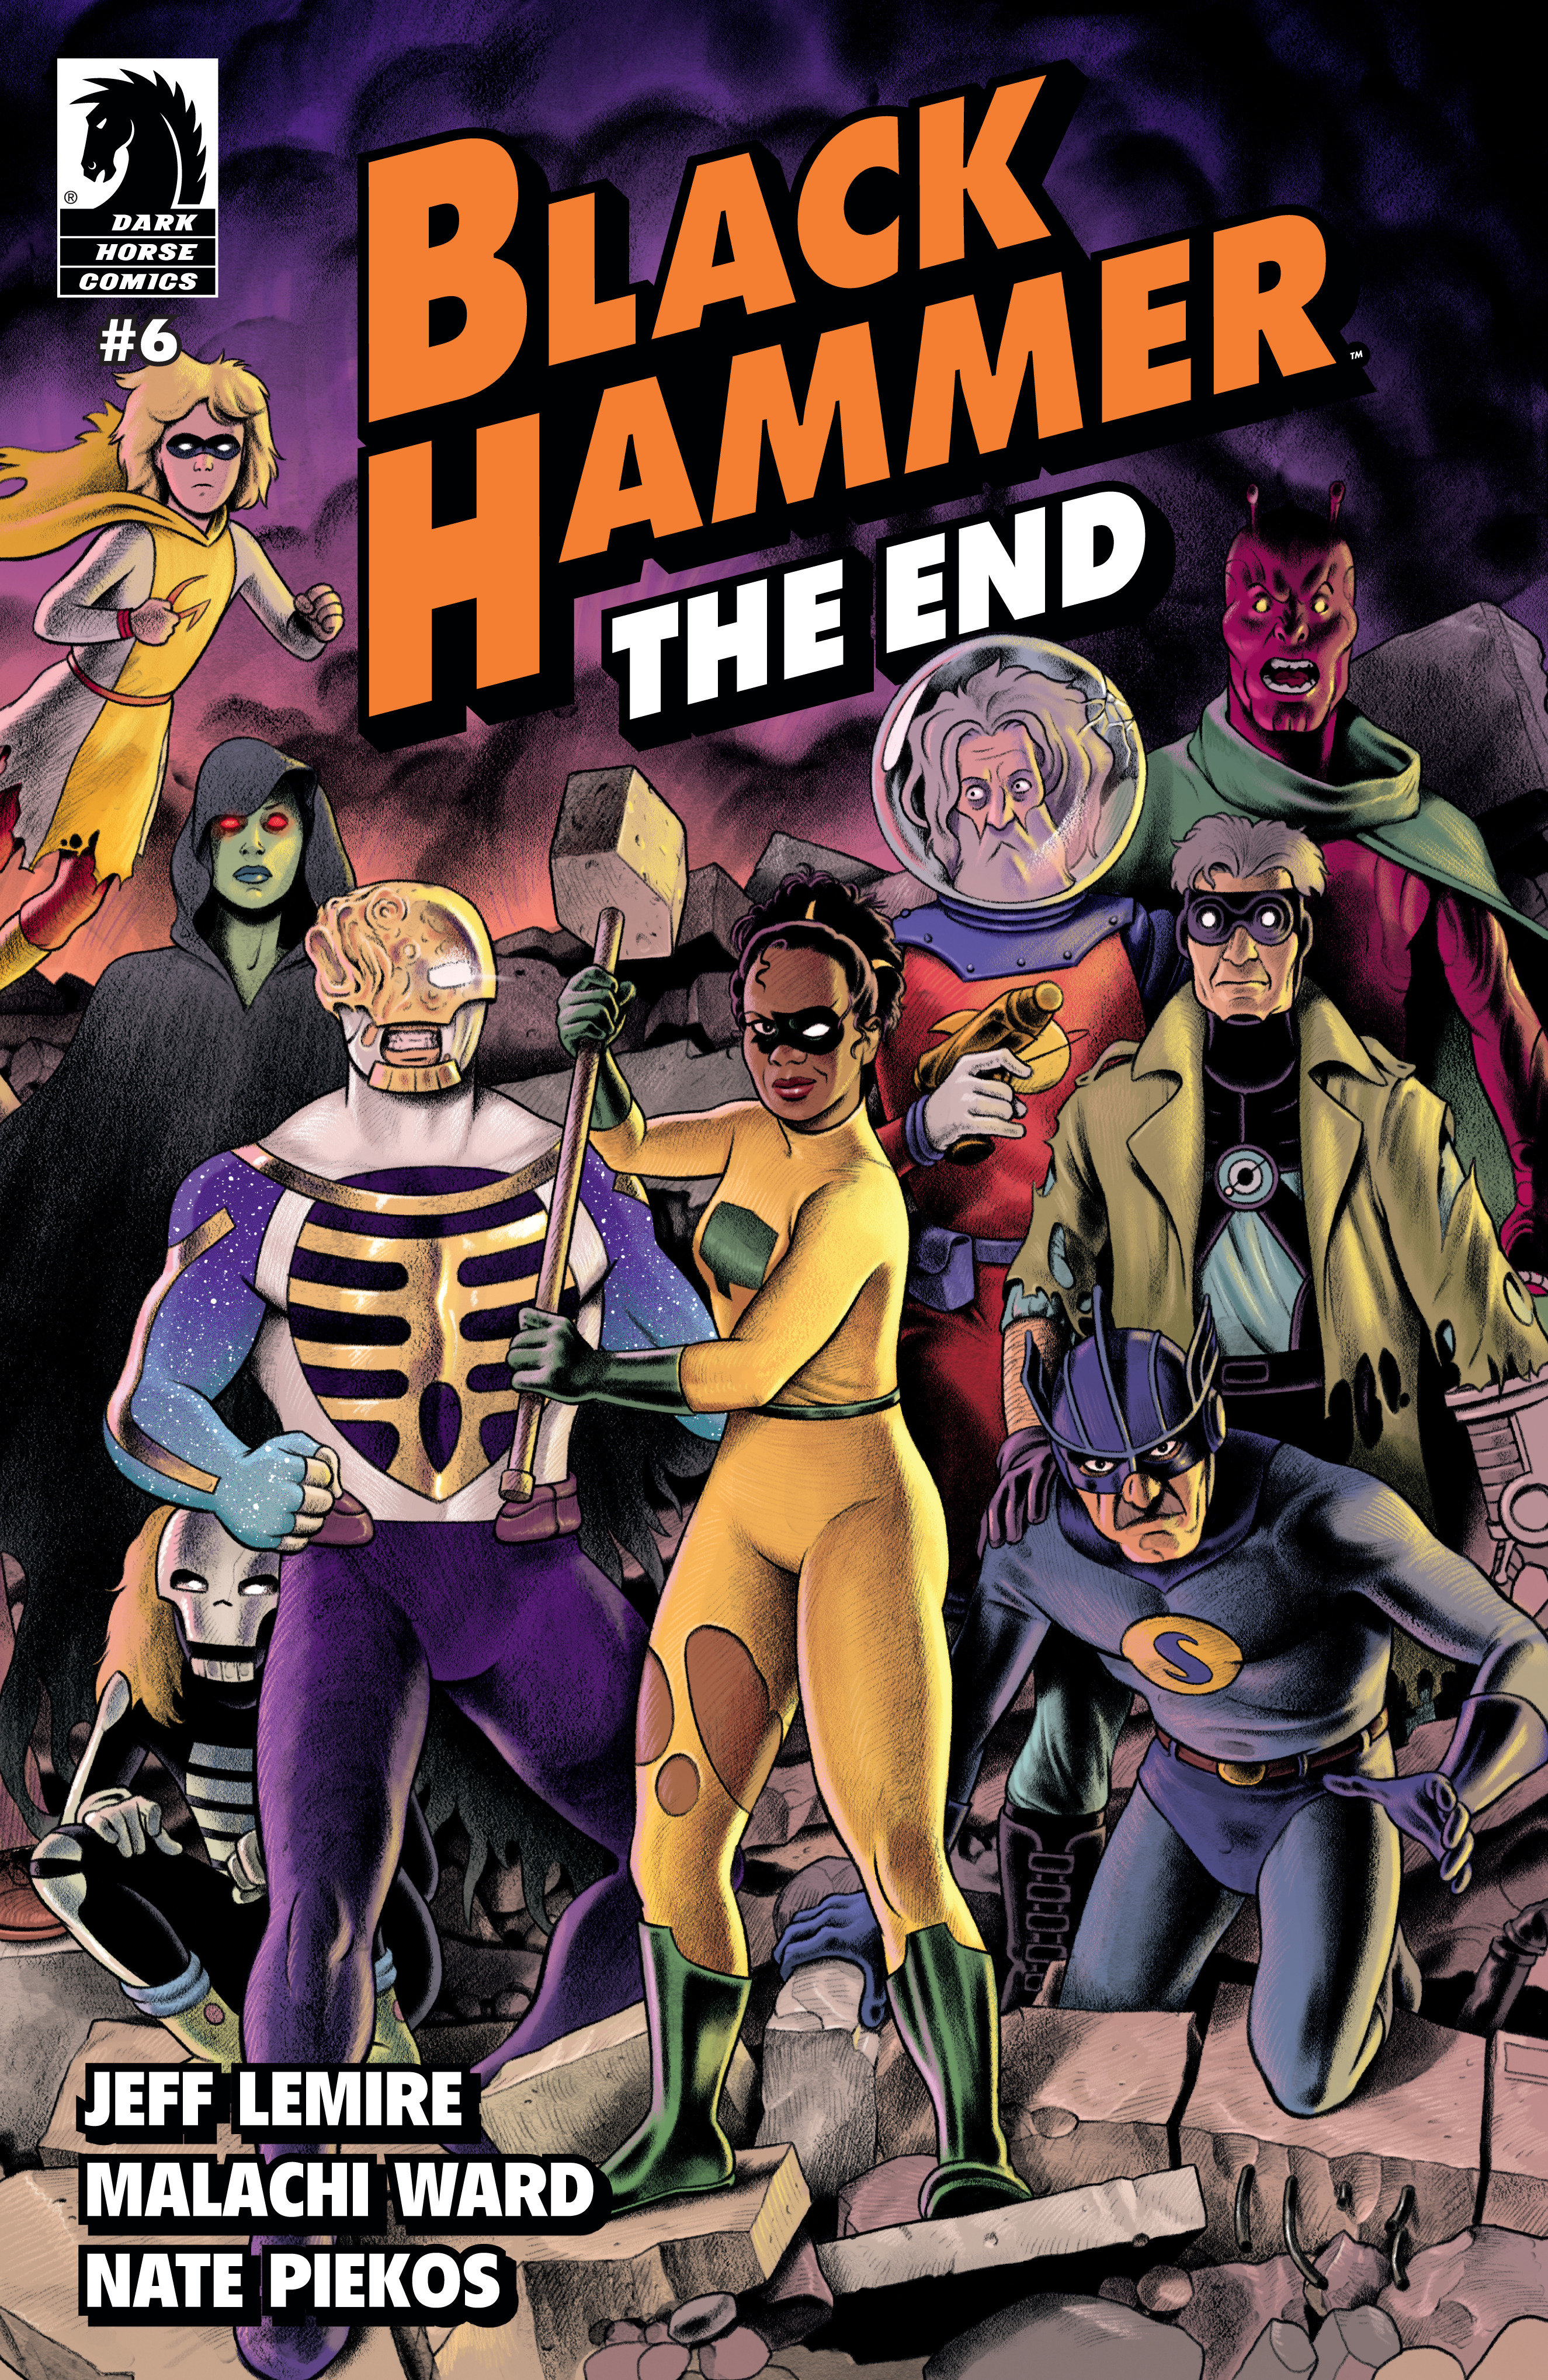 Black Hammer The End #6 Cover A (Malachi Ward)